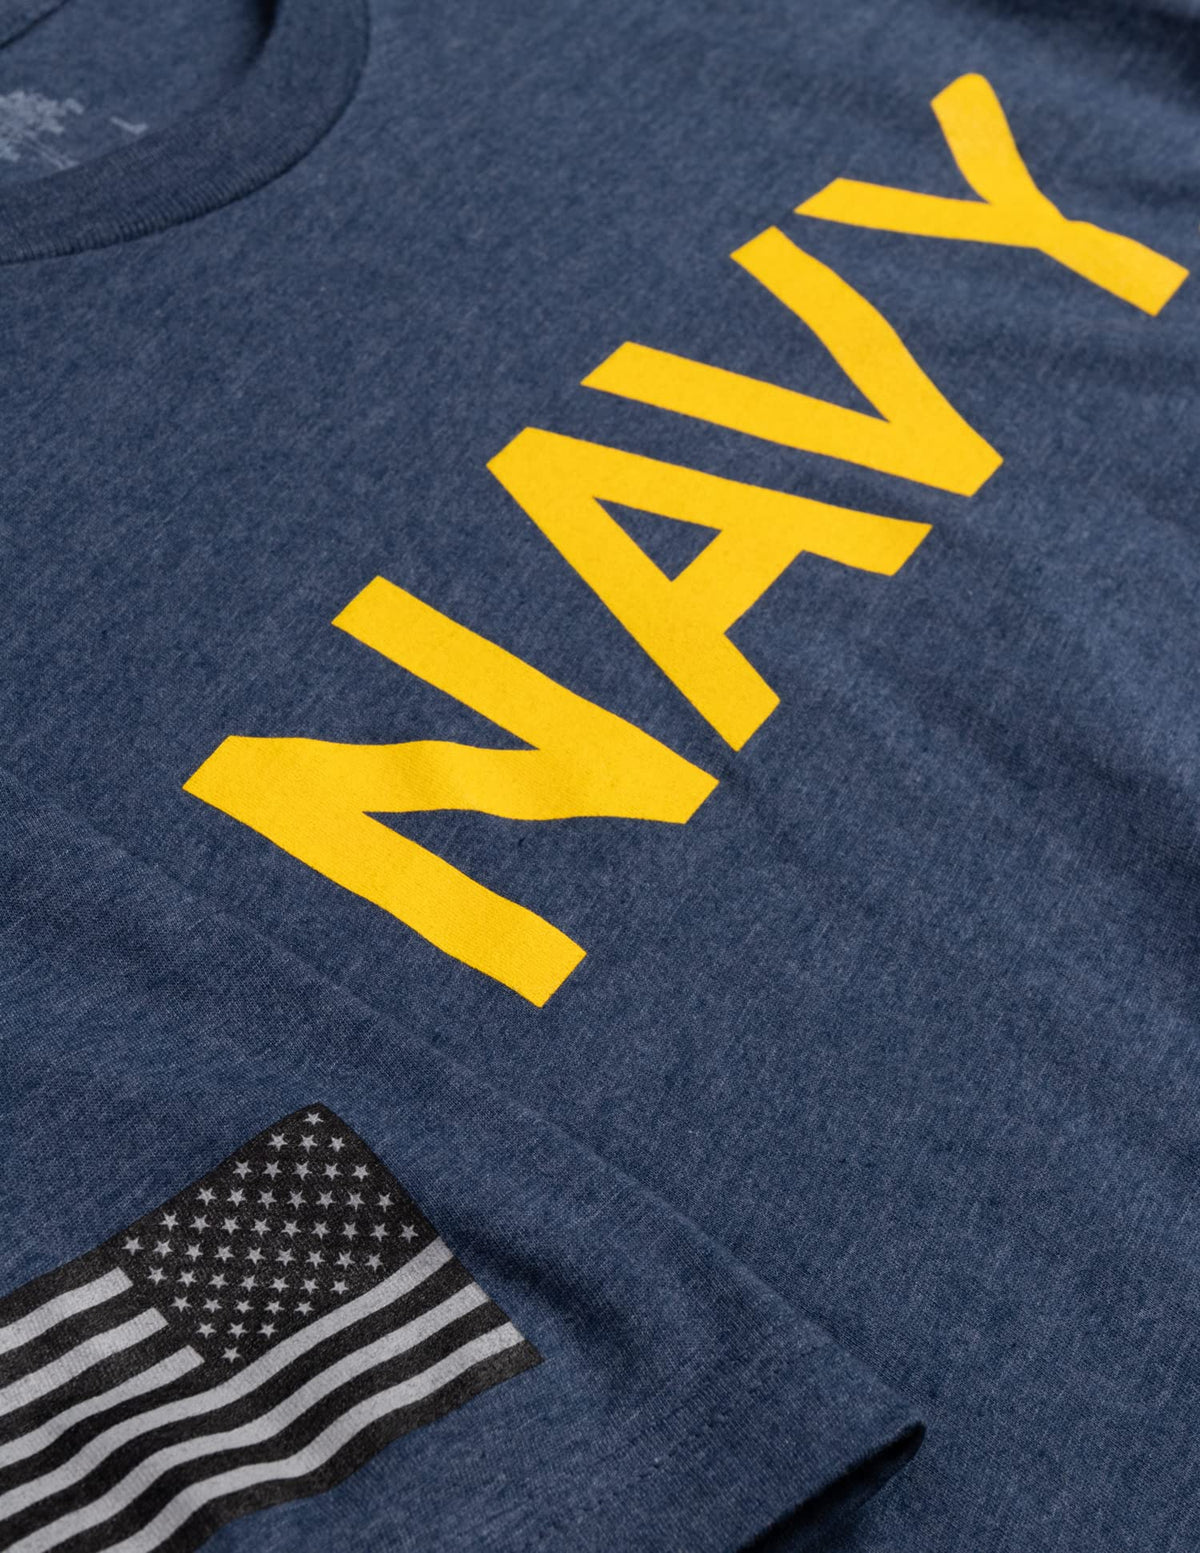 USS Green Bay, LPD-20 | U.S. Navy Sailor Veteran USN United States Naval T-shirt for Men Women